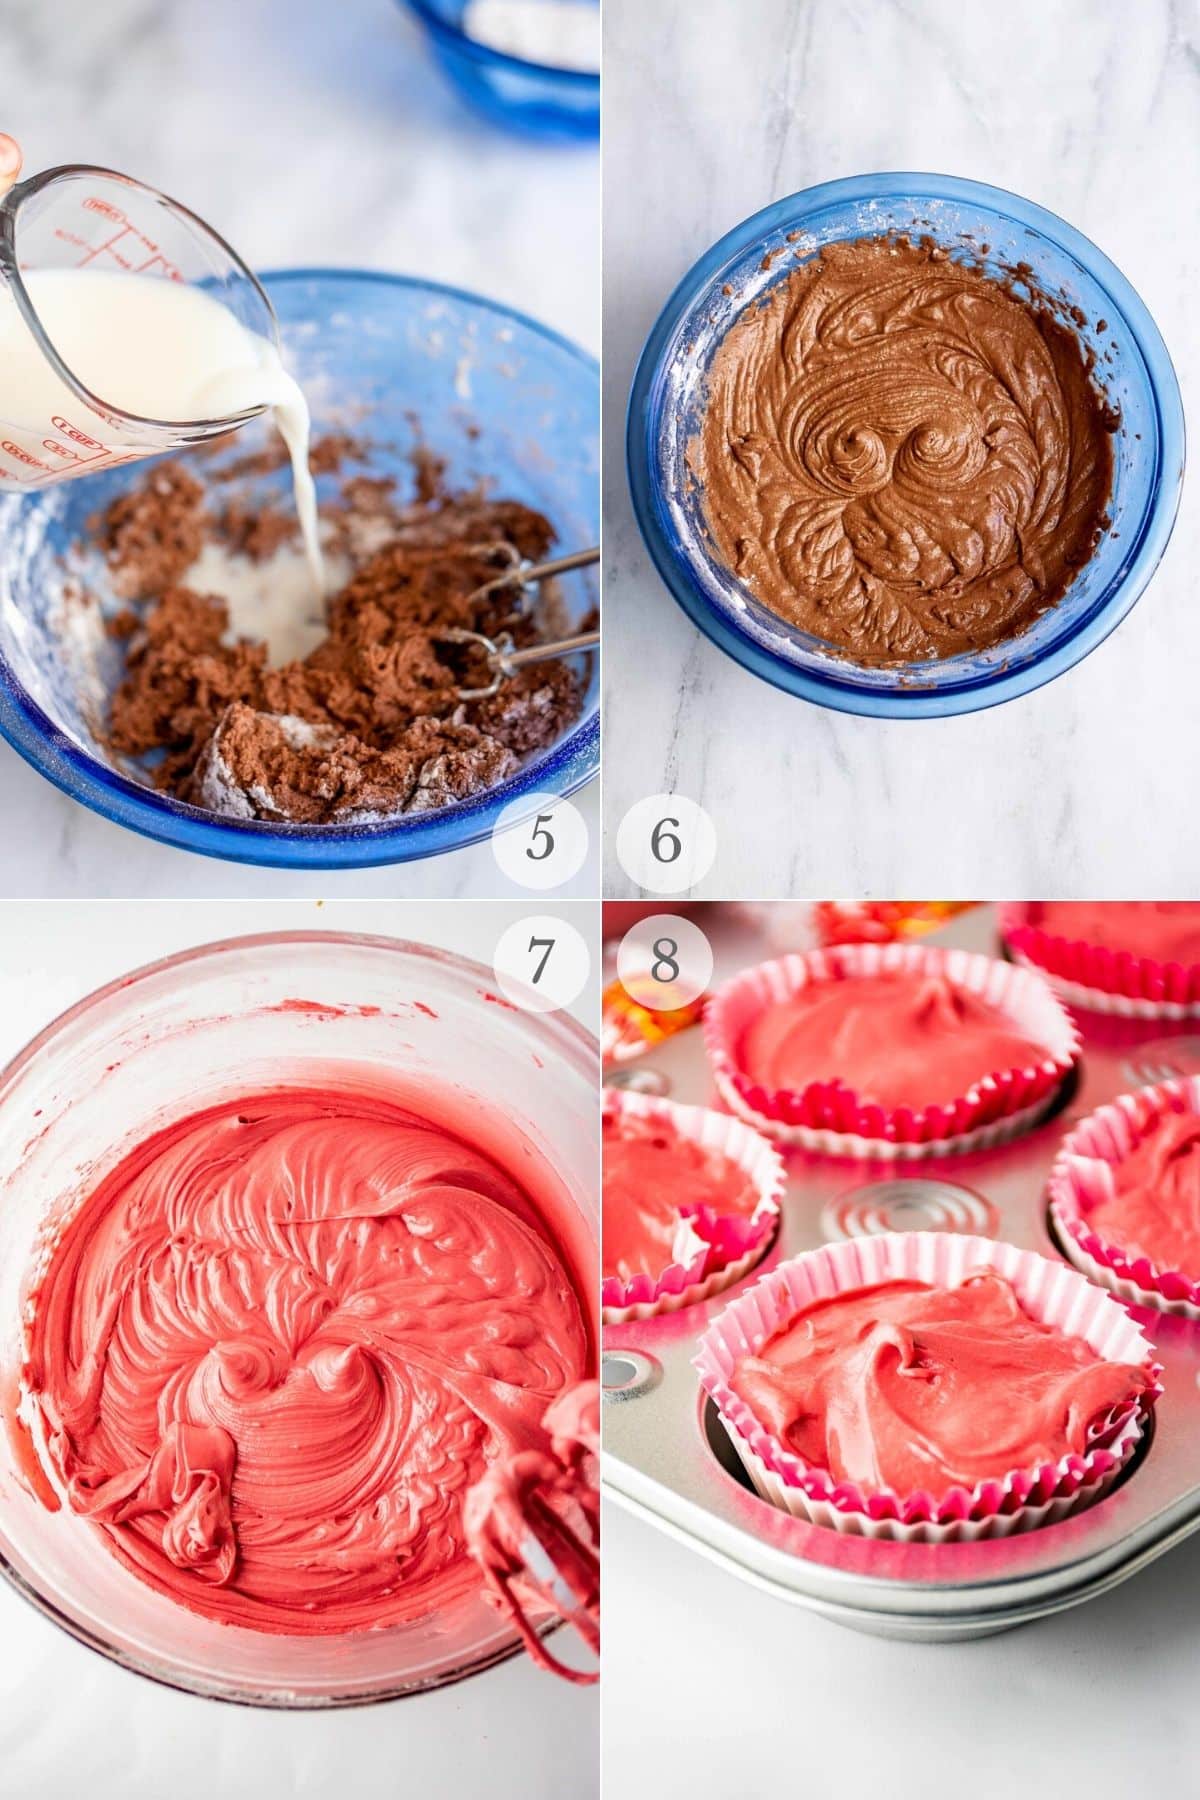 pink velvet cupcakes recipe steps 5-8